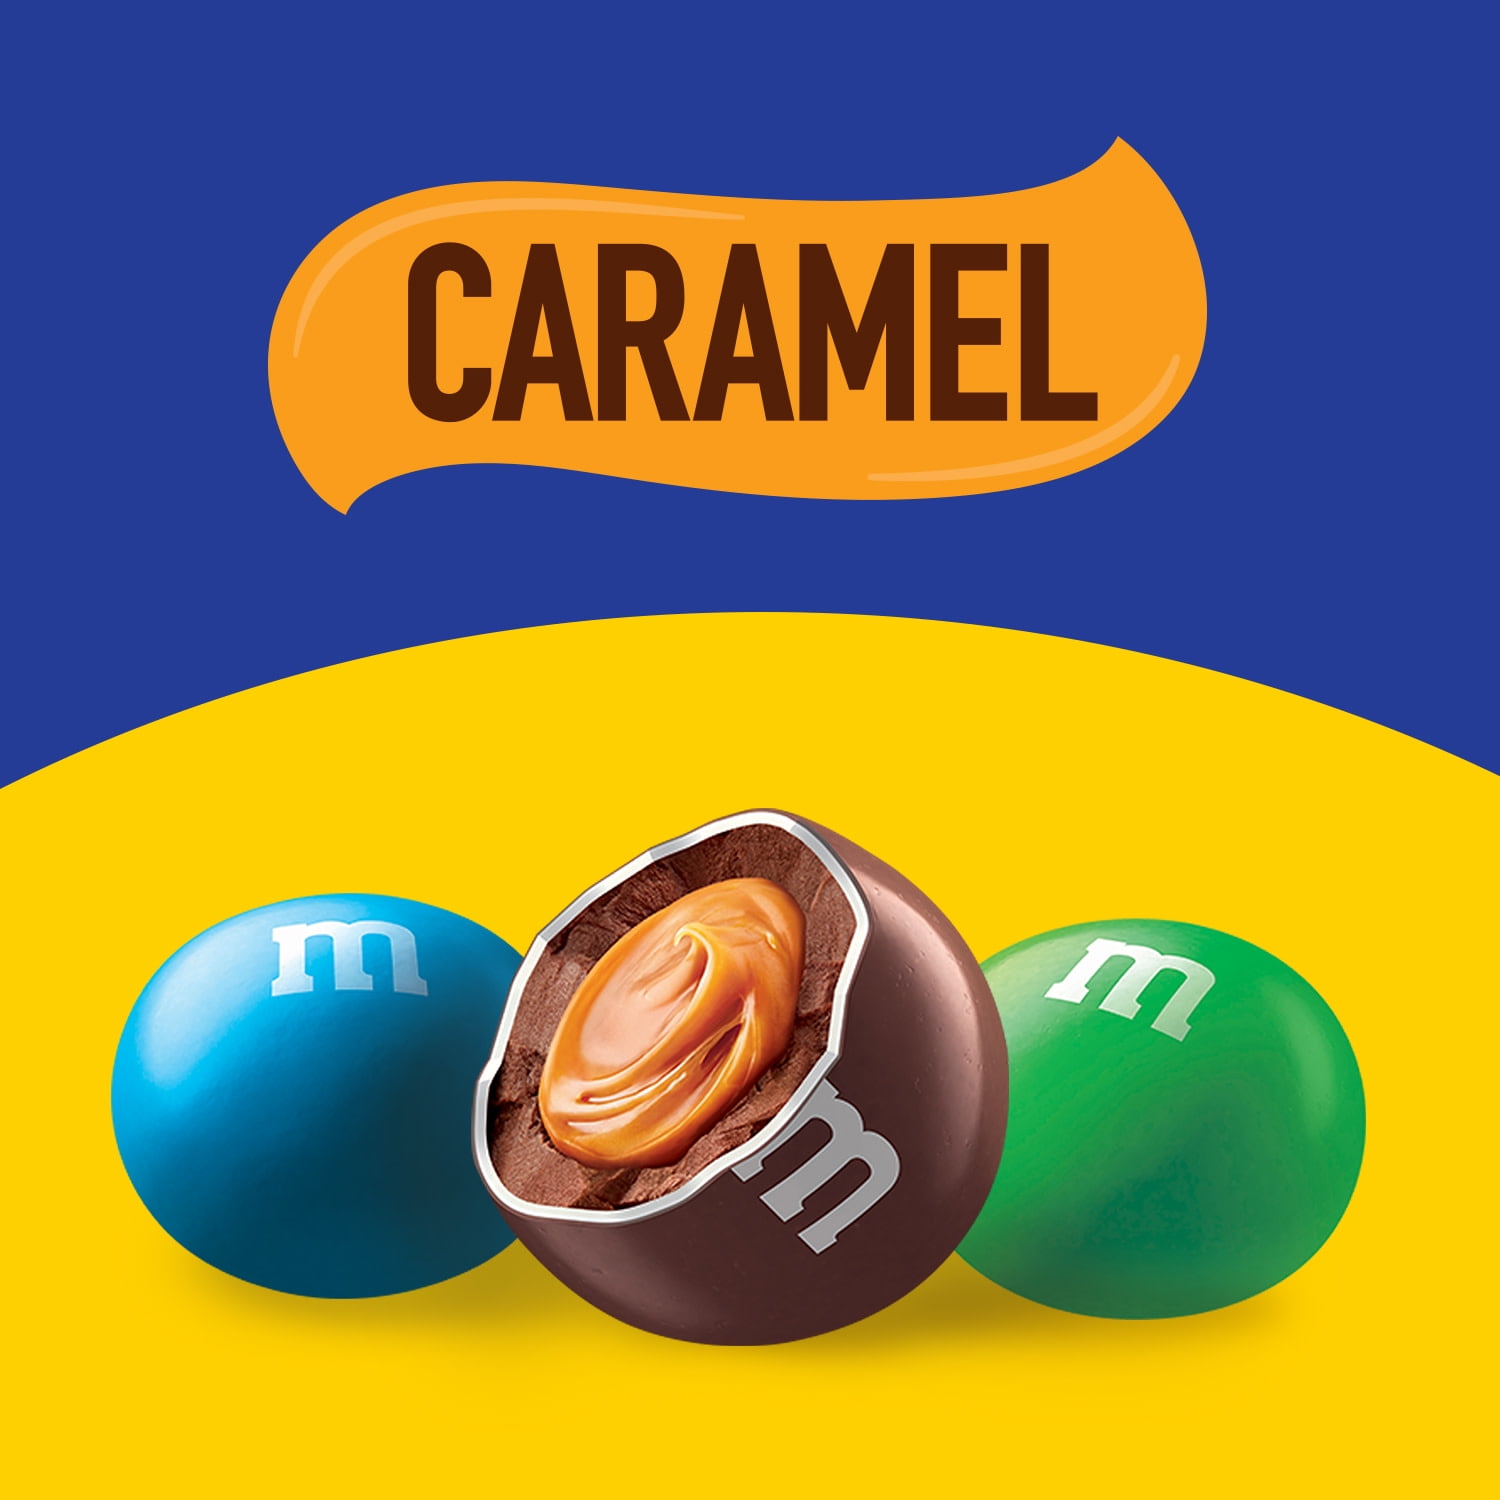 M&M'S Caramel Milk Chocolate Candy Party Size Bag, 34 oz - Kroger